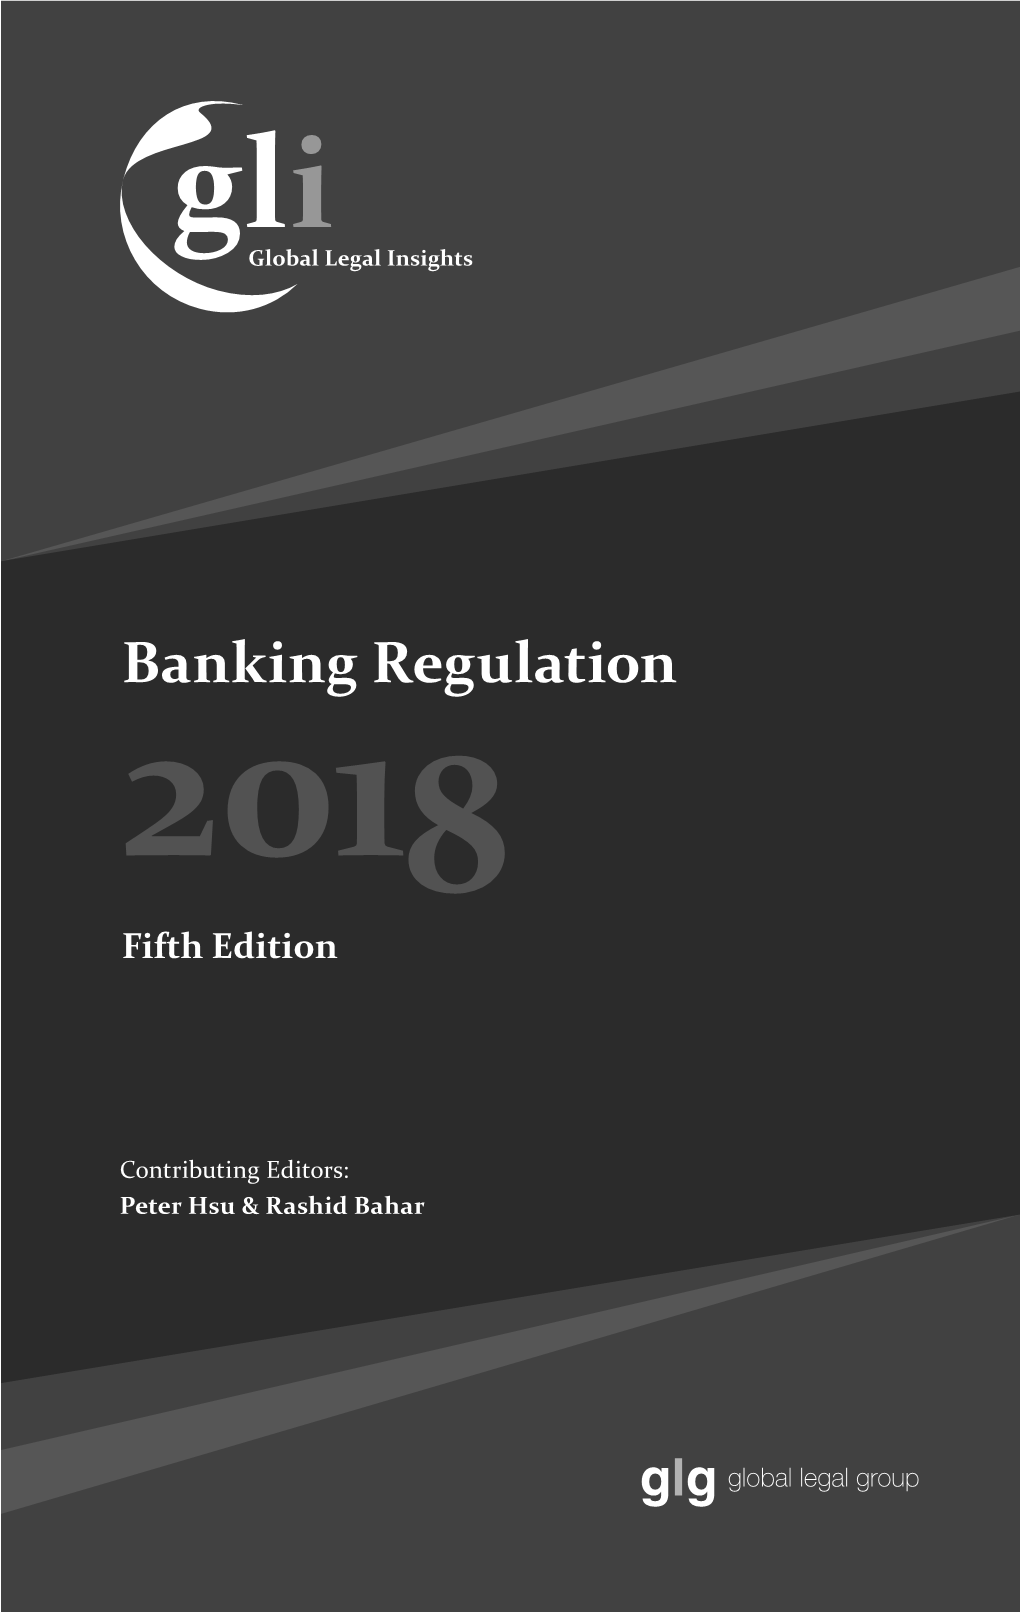 Banking Regulation 2018 Fifth Edition